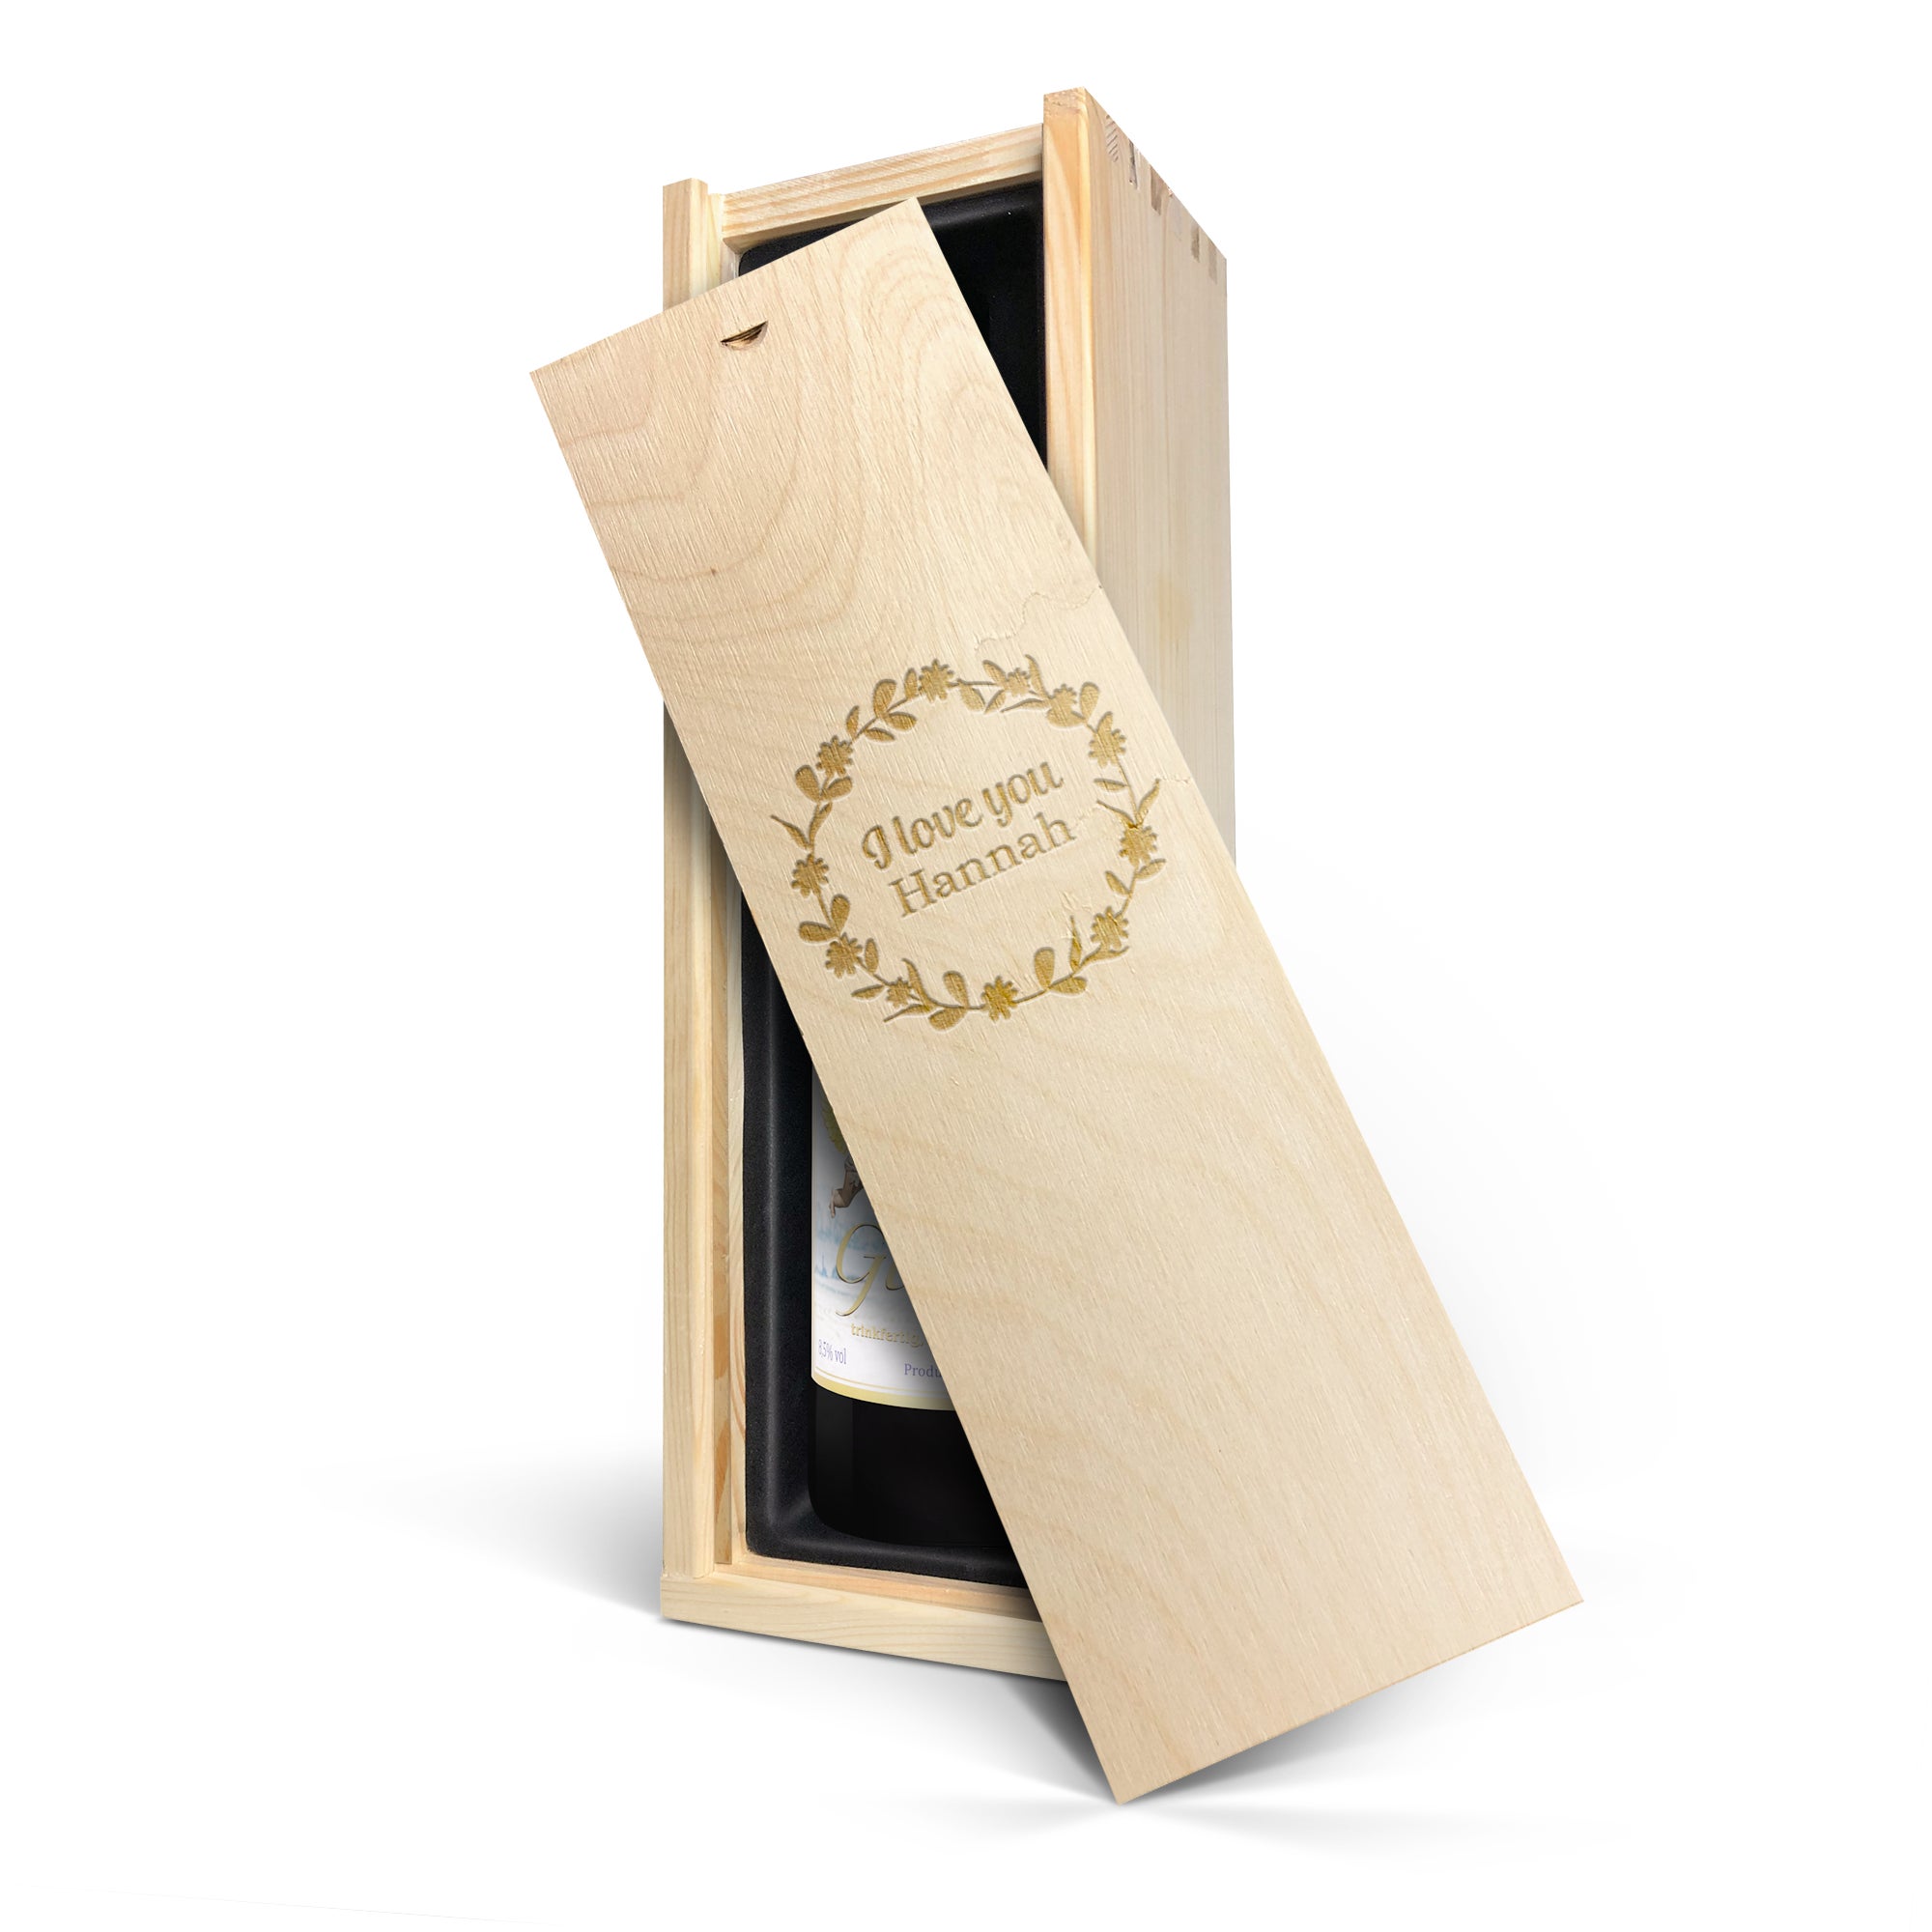 Personalised mulled wine gift - Engelsglut - Engraved wooden case